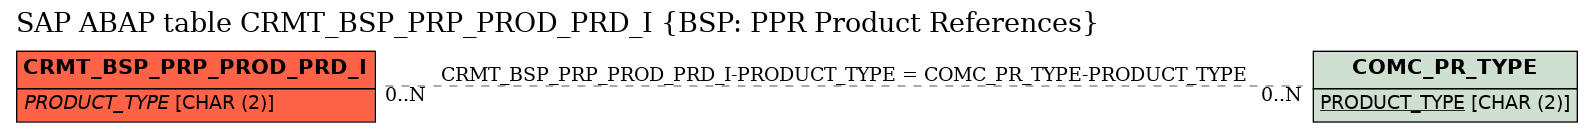 E-R Diagram for table CRMT_BSP_PRP_PROD_PRD_I (BSP: PPR Product References)